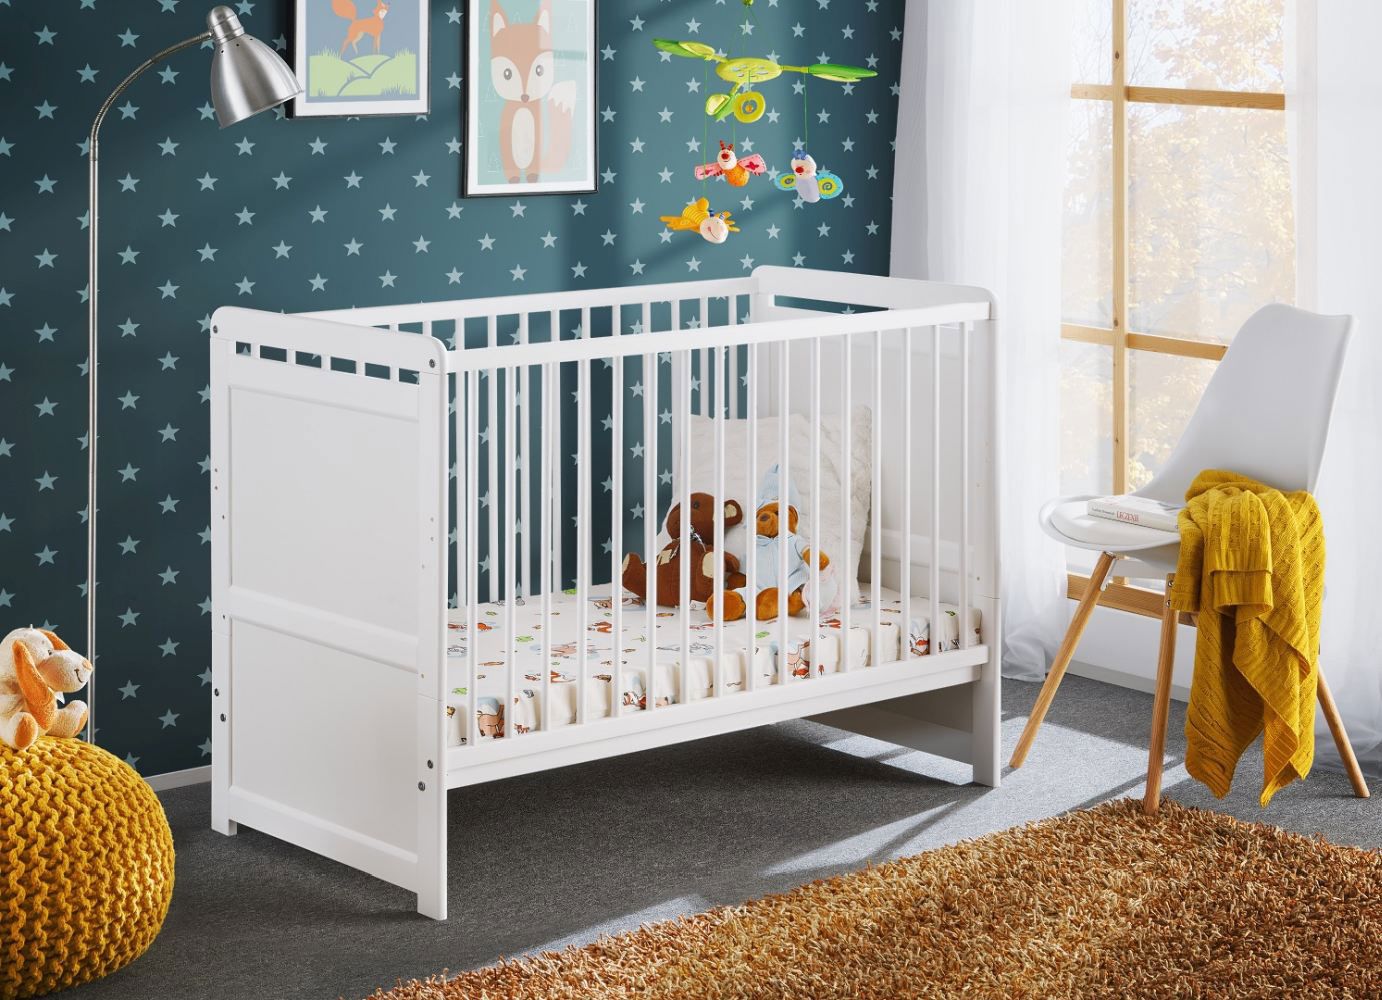 Crib / crib with one mattress Avaldsnes 10, color: white - Dimensions: 90 x 124 x 67 cm (H x W x D)